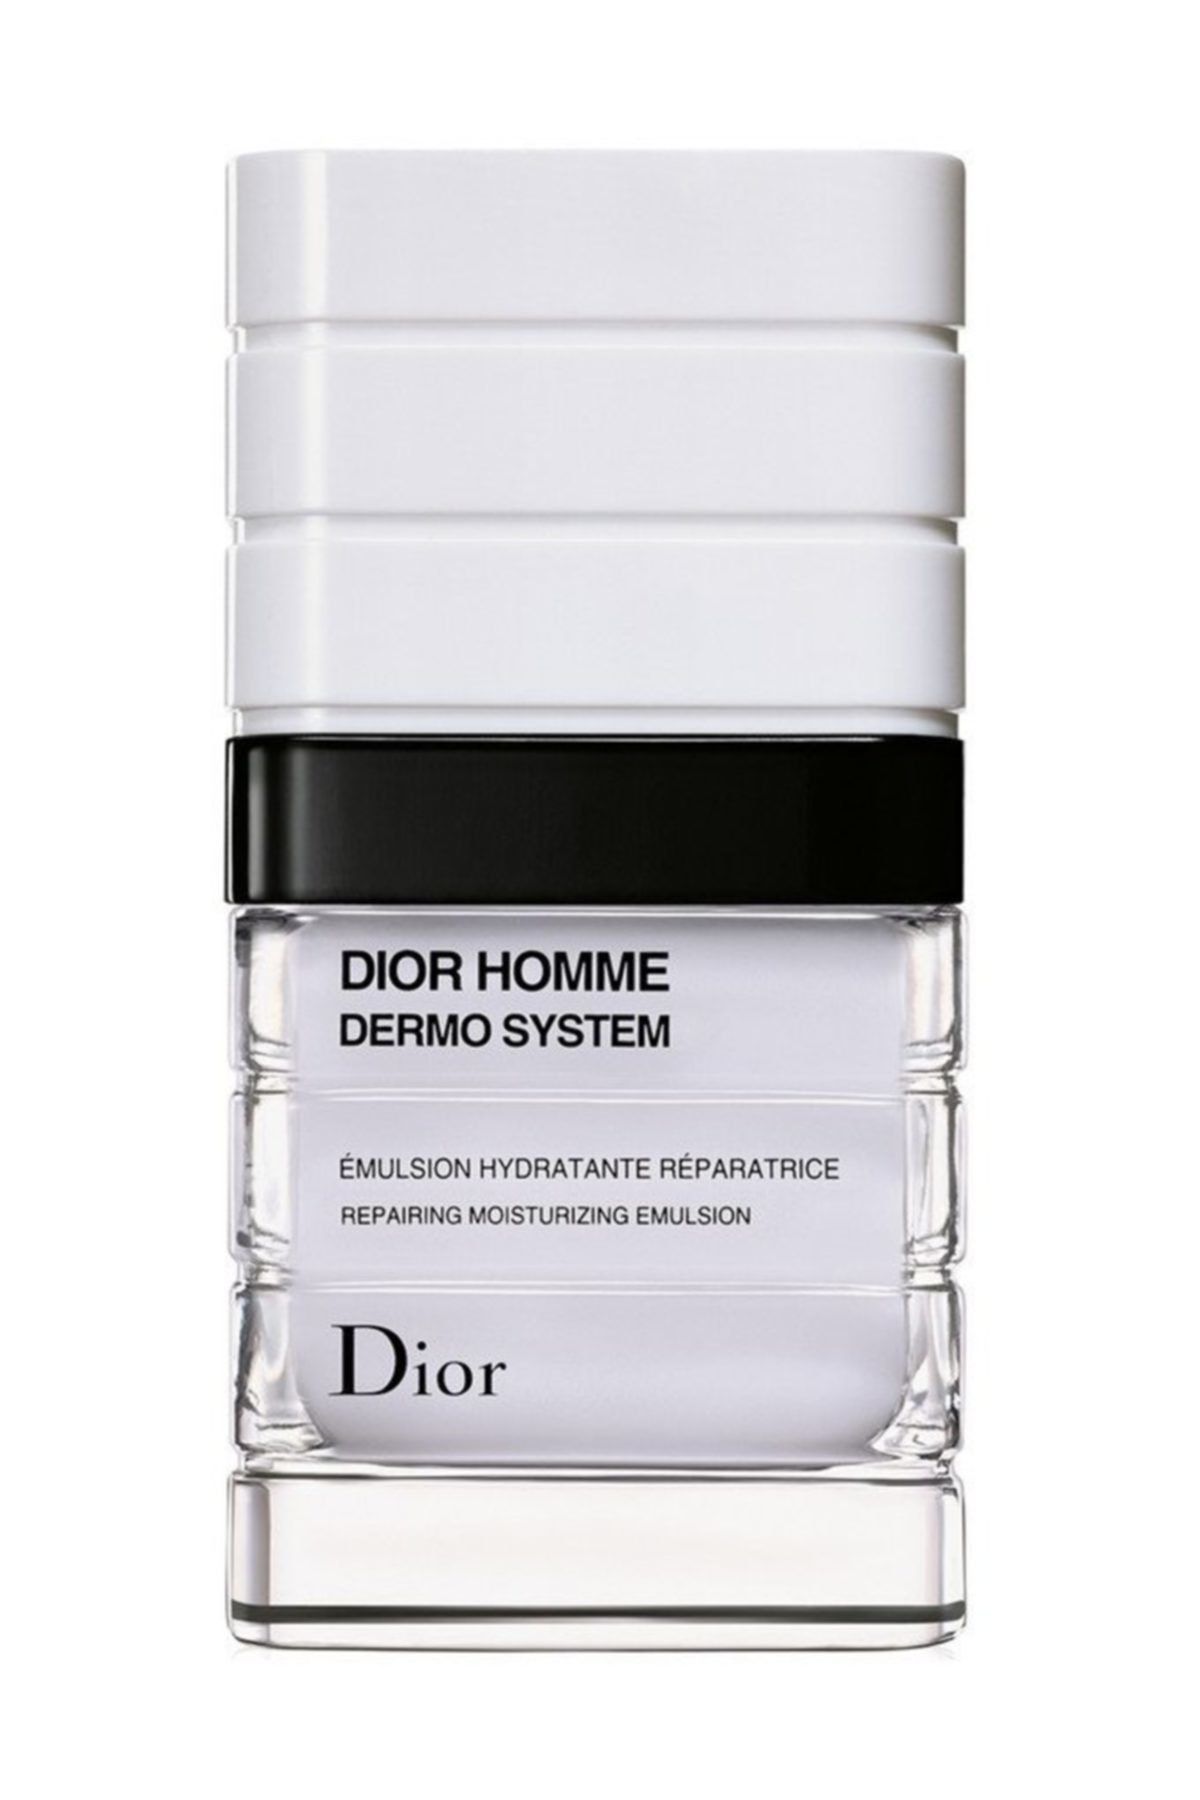 Dior Homme Dermo System Emulsion Hydratante Reparatrice 50 ml